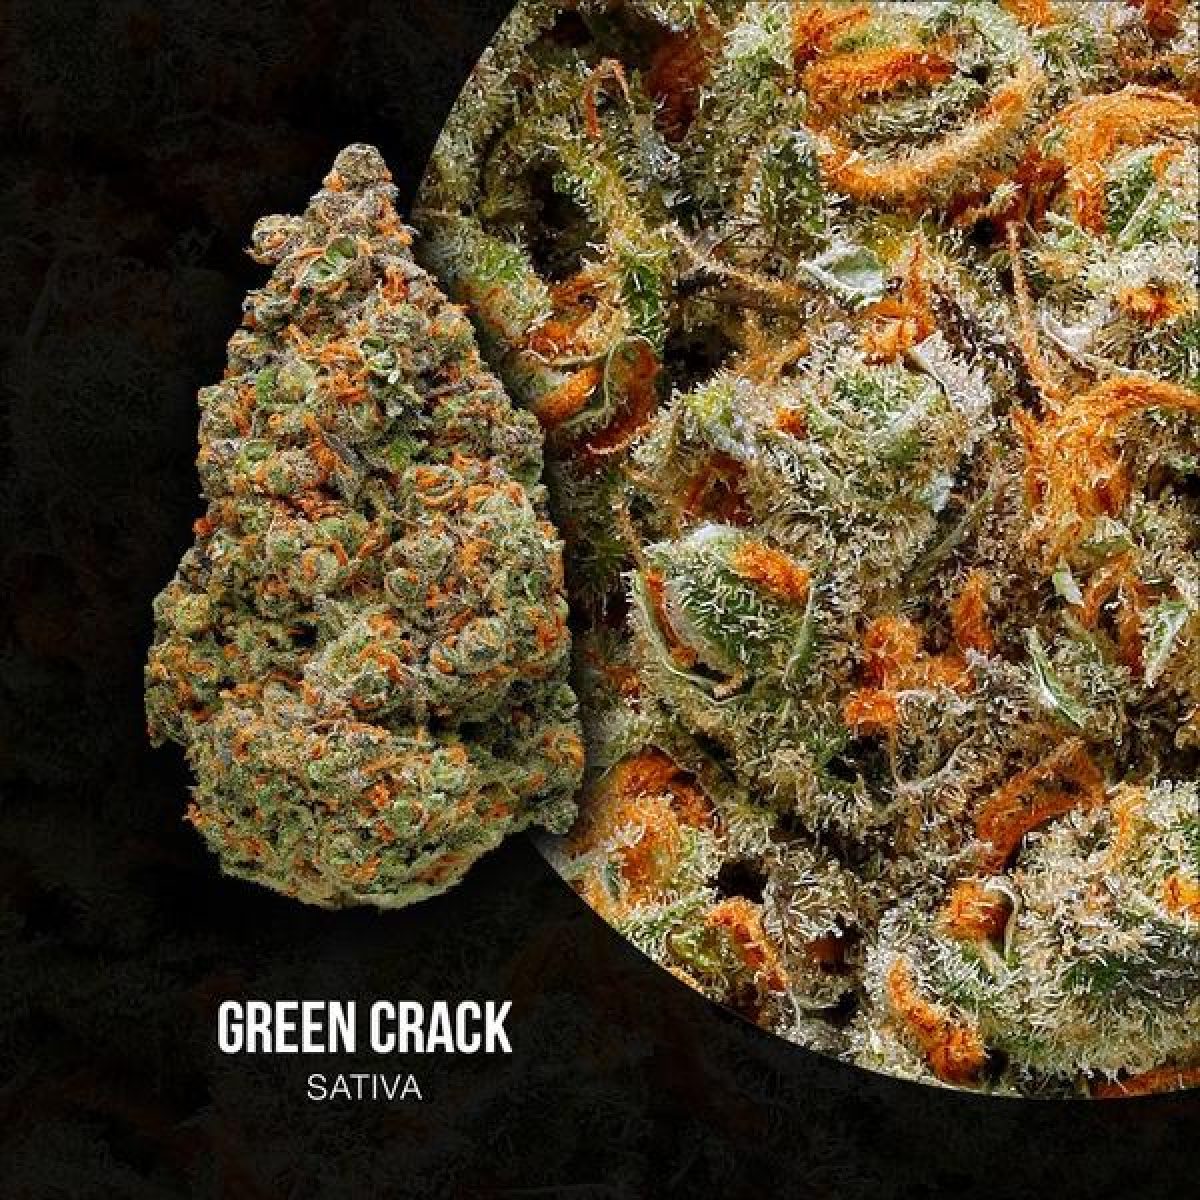 strawberry cough vs green crack